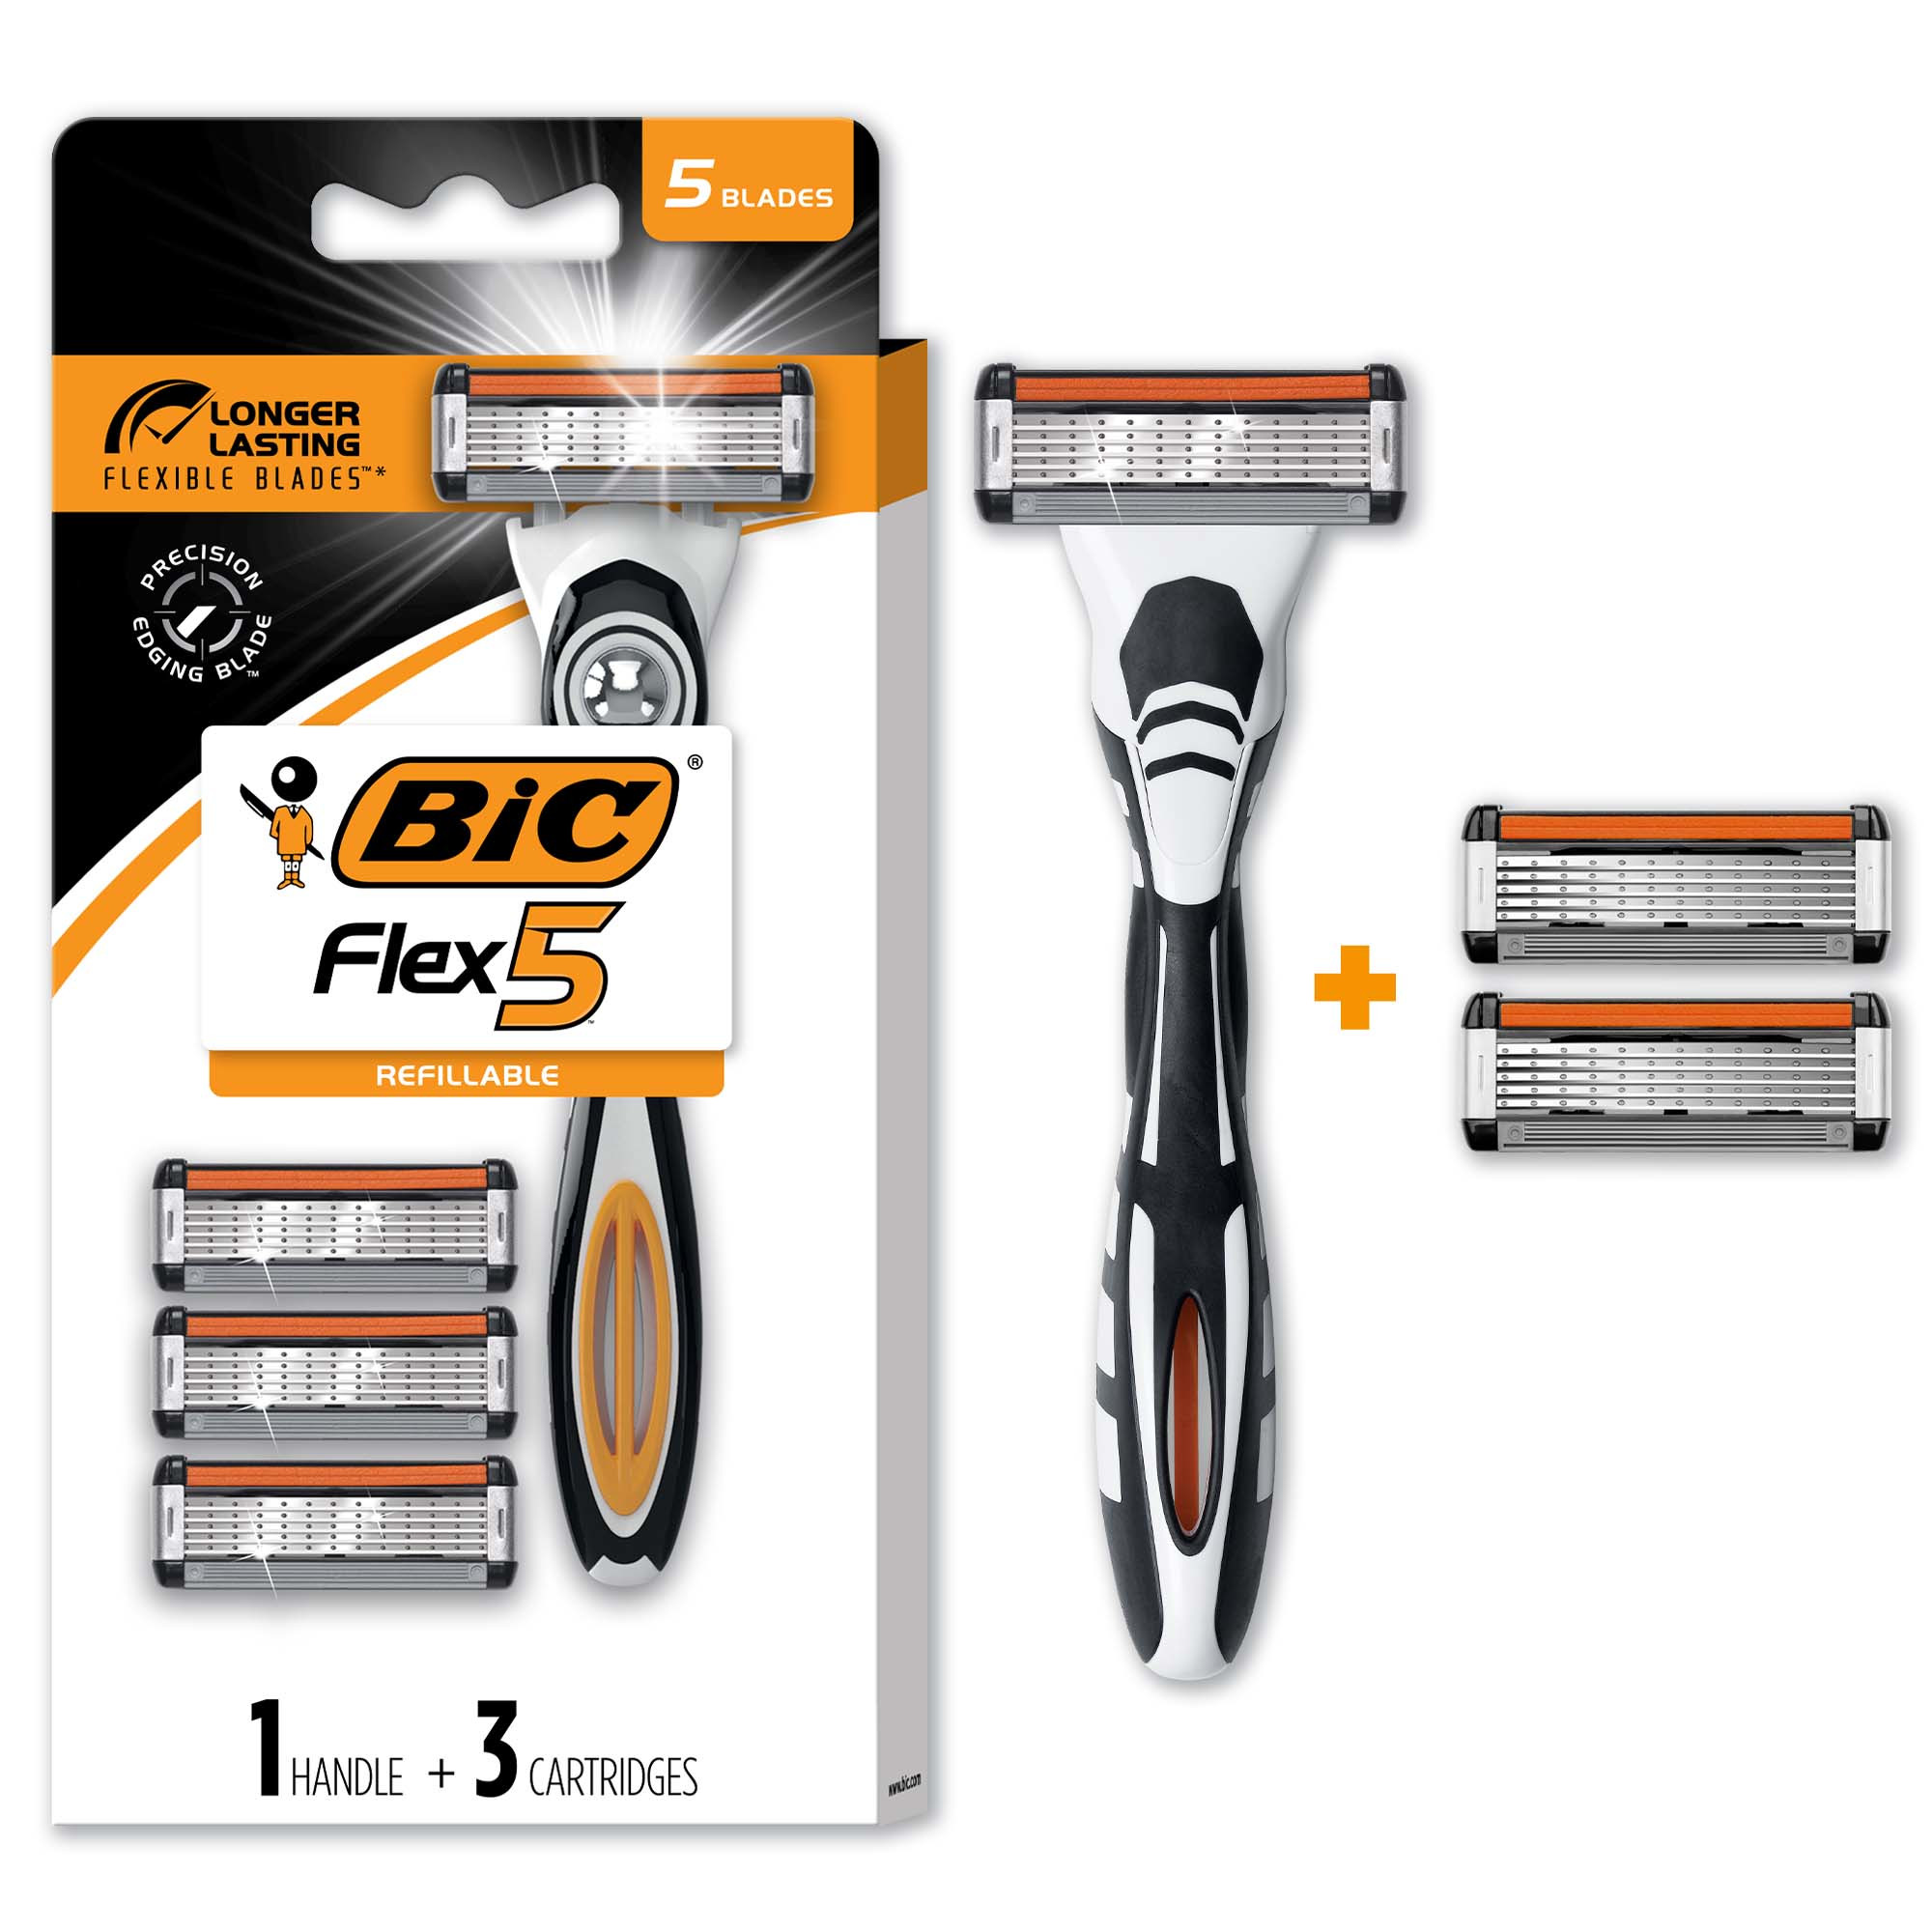 BIC Flex 5 Blade Refillable Razors, Men's, 5-Blade, 1 Handle and 3 Cartridges - image 1 of 11